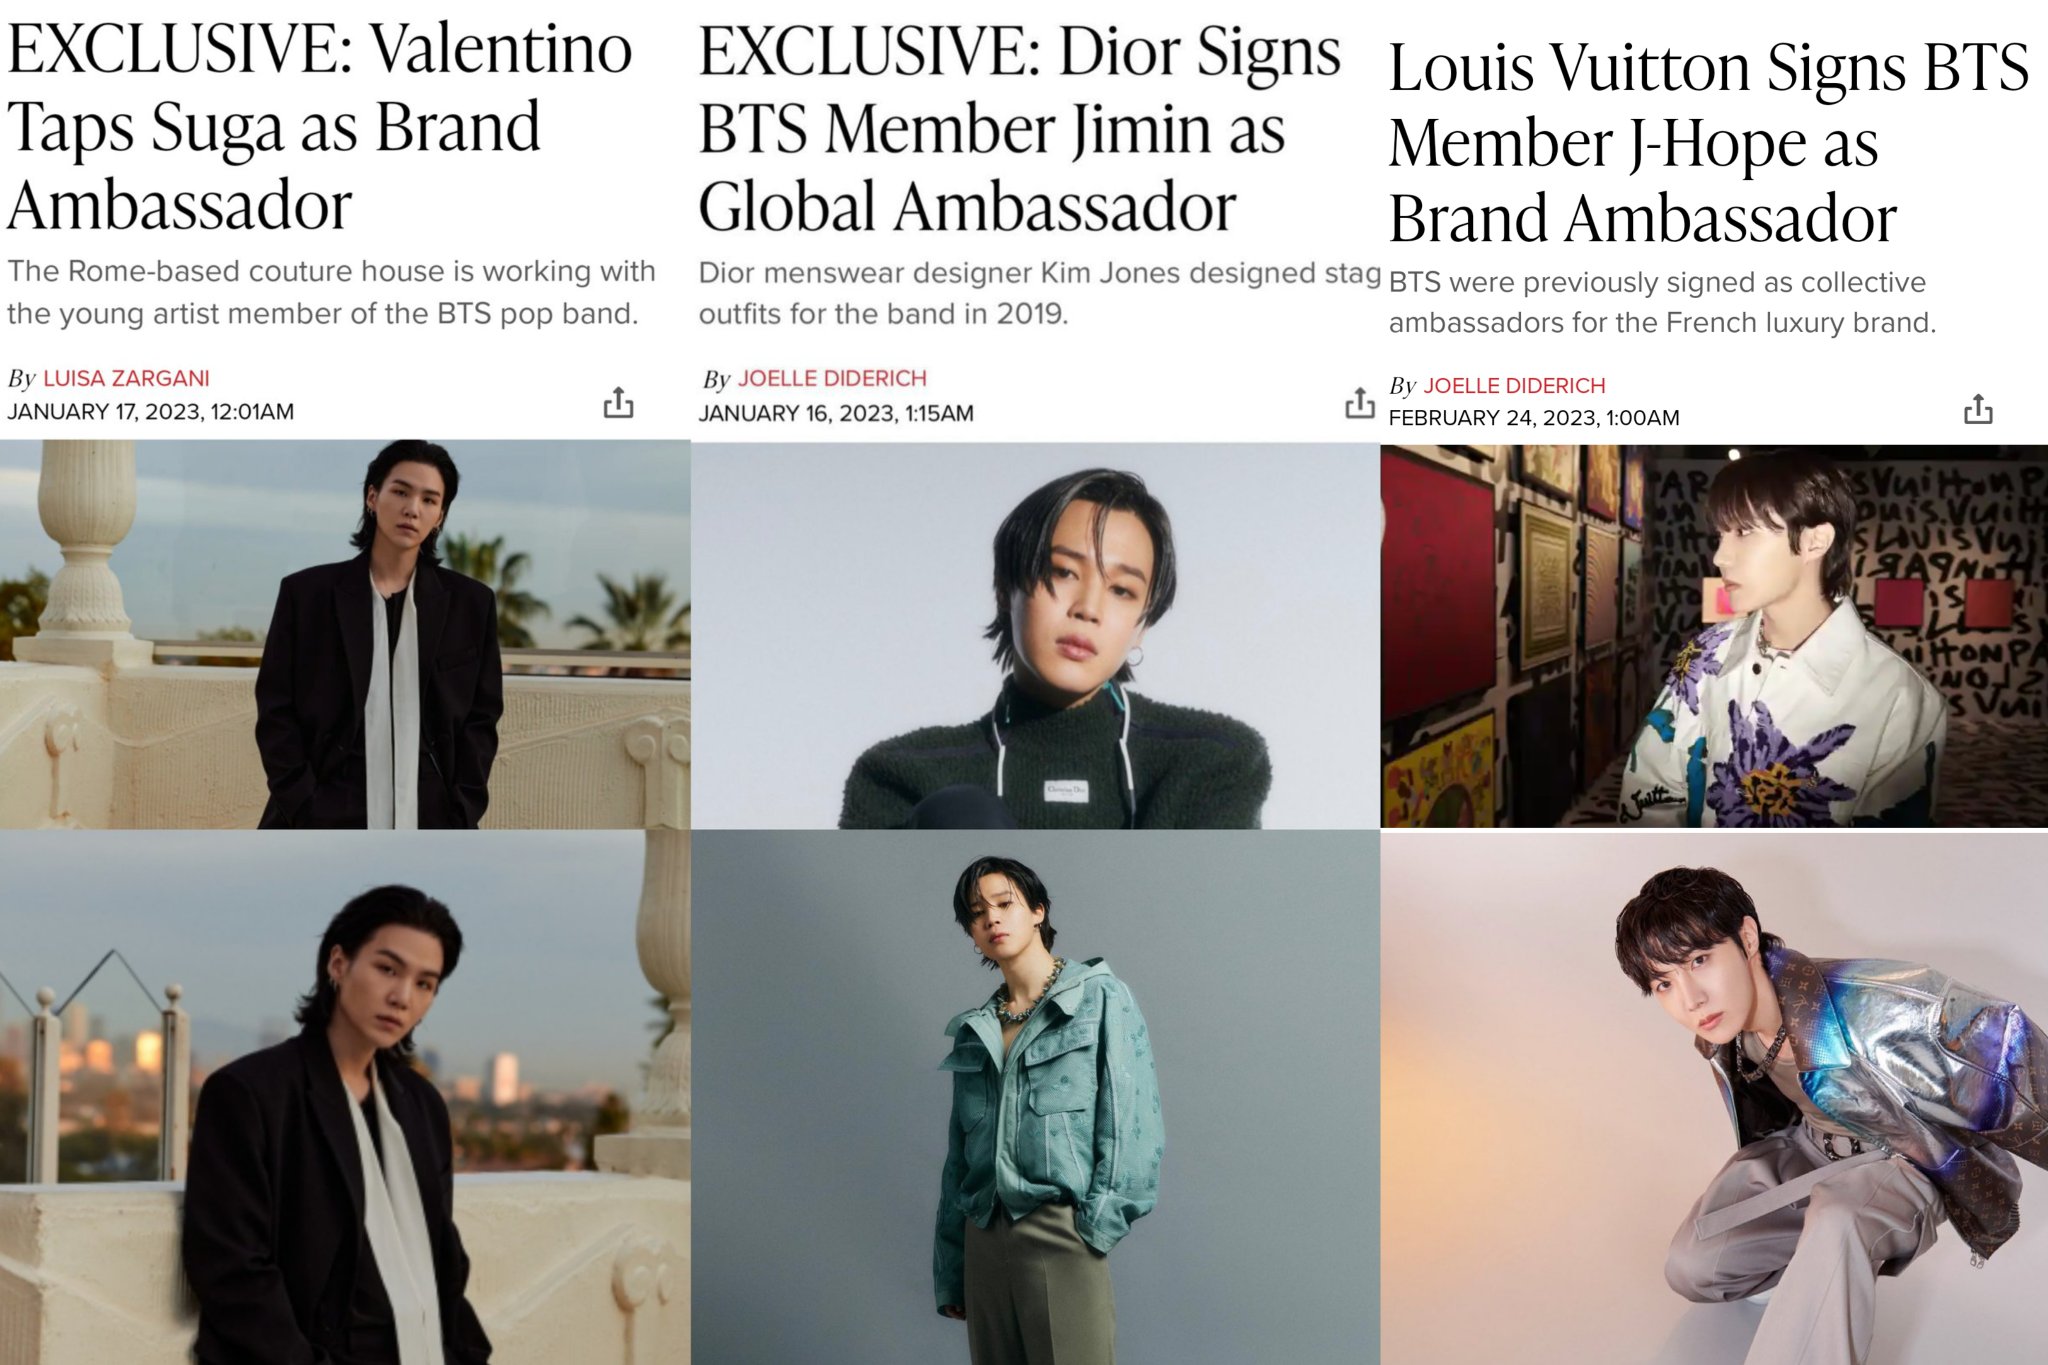 BTS' Jung Kook tapped as brand ambassador for Calvin Klein